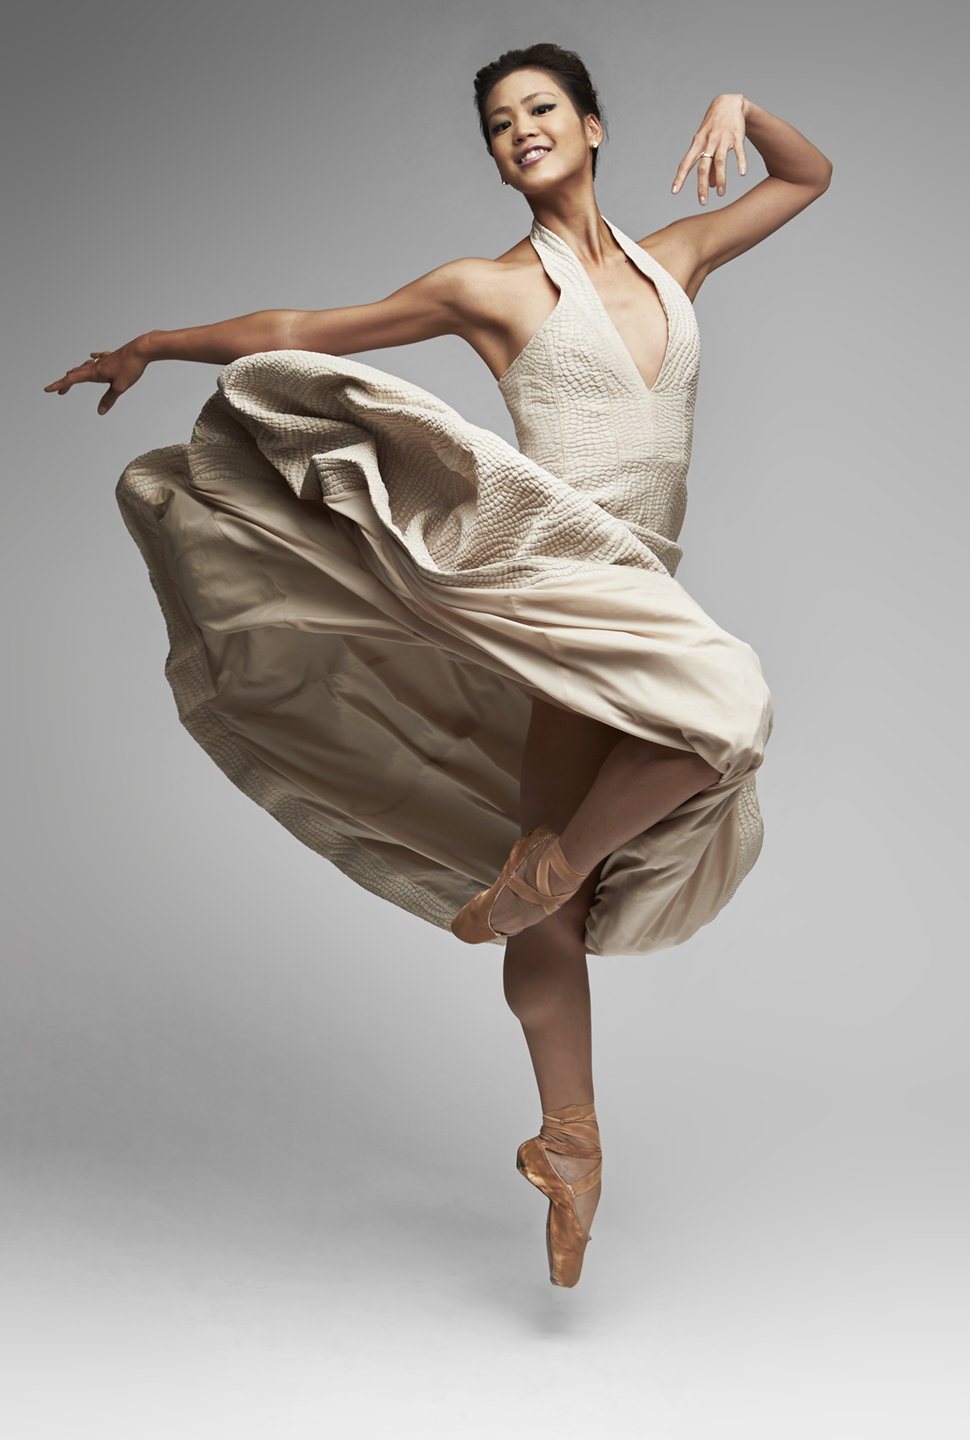 Ballet Photographer Brandon McGanty